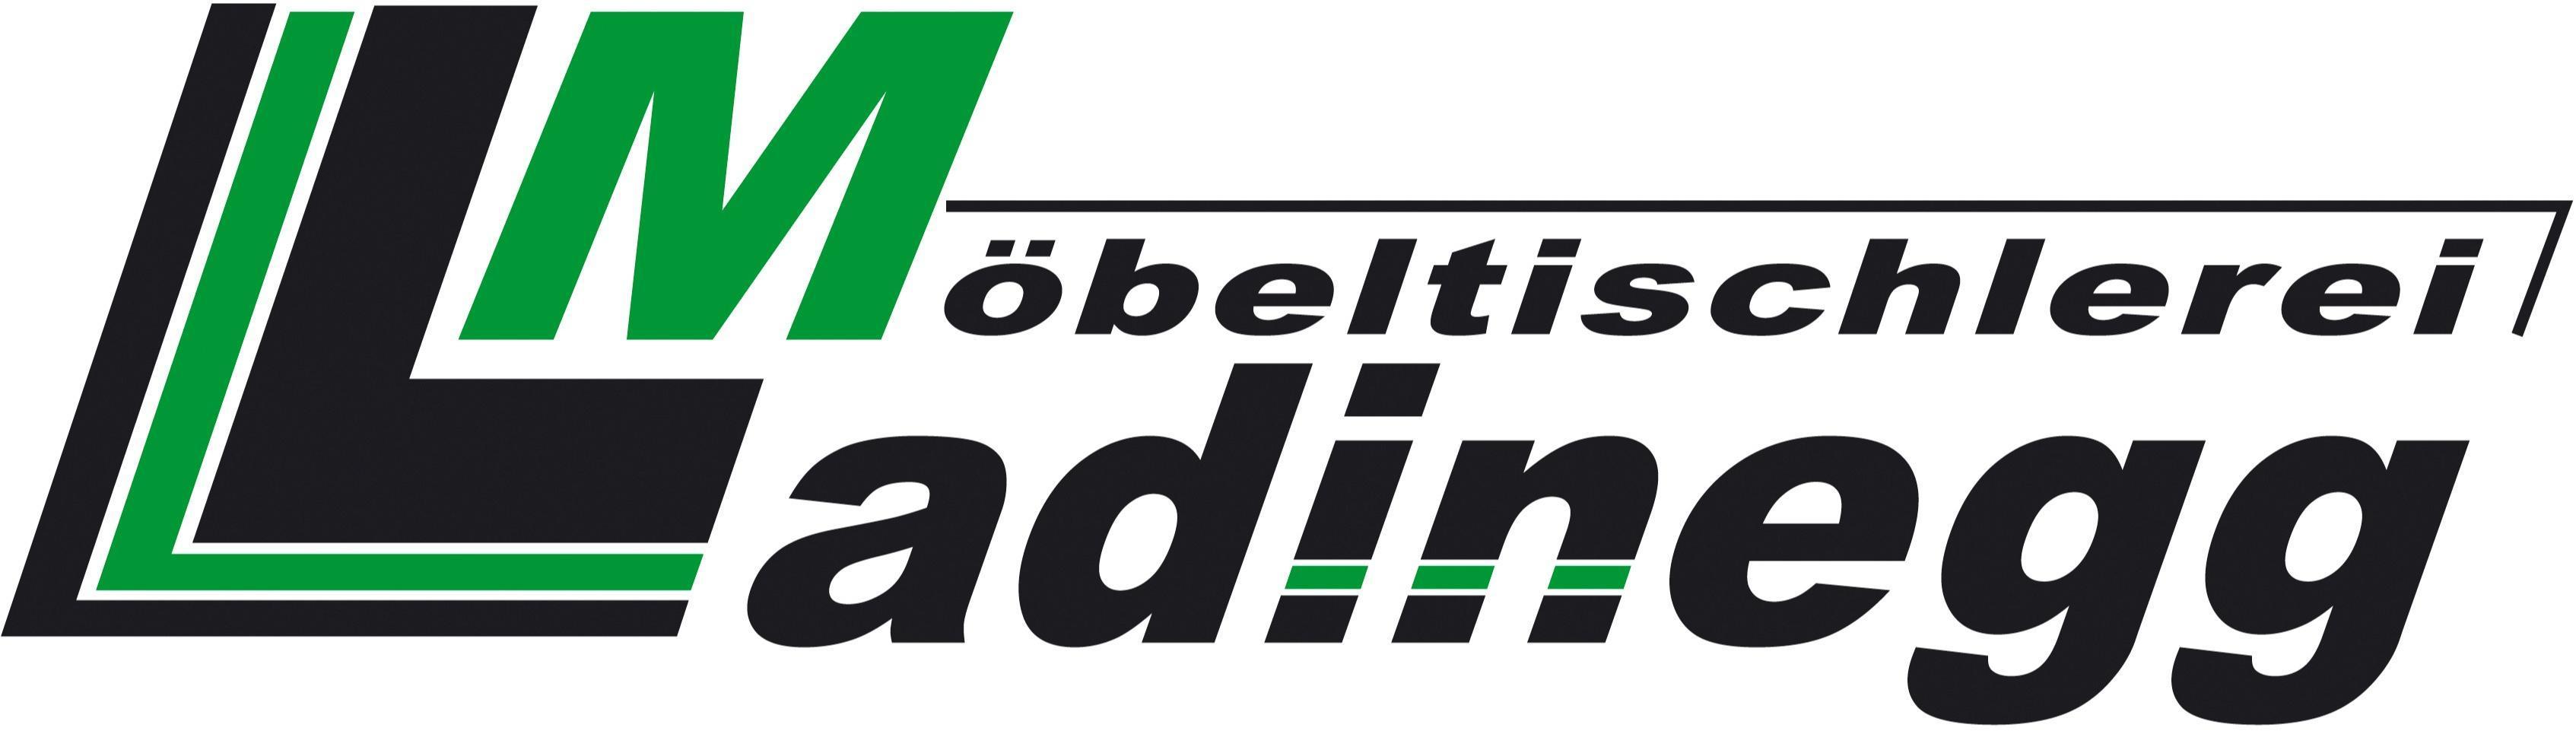 Logo Möbeltischlerei Ladinegg GmbH